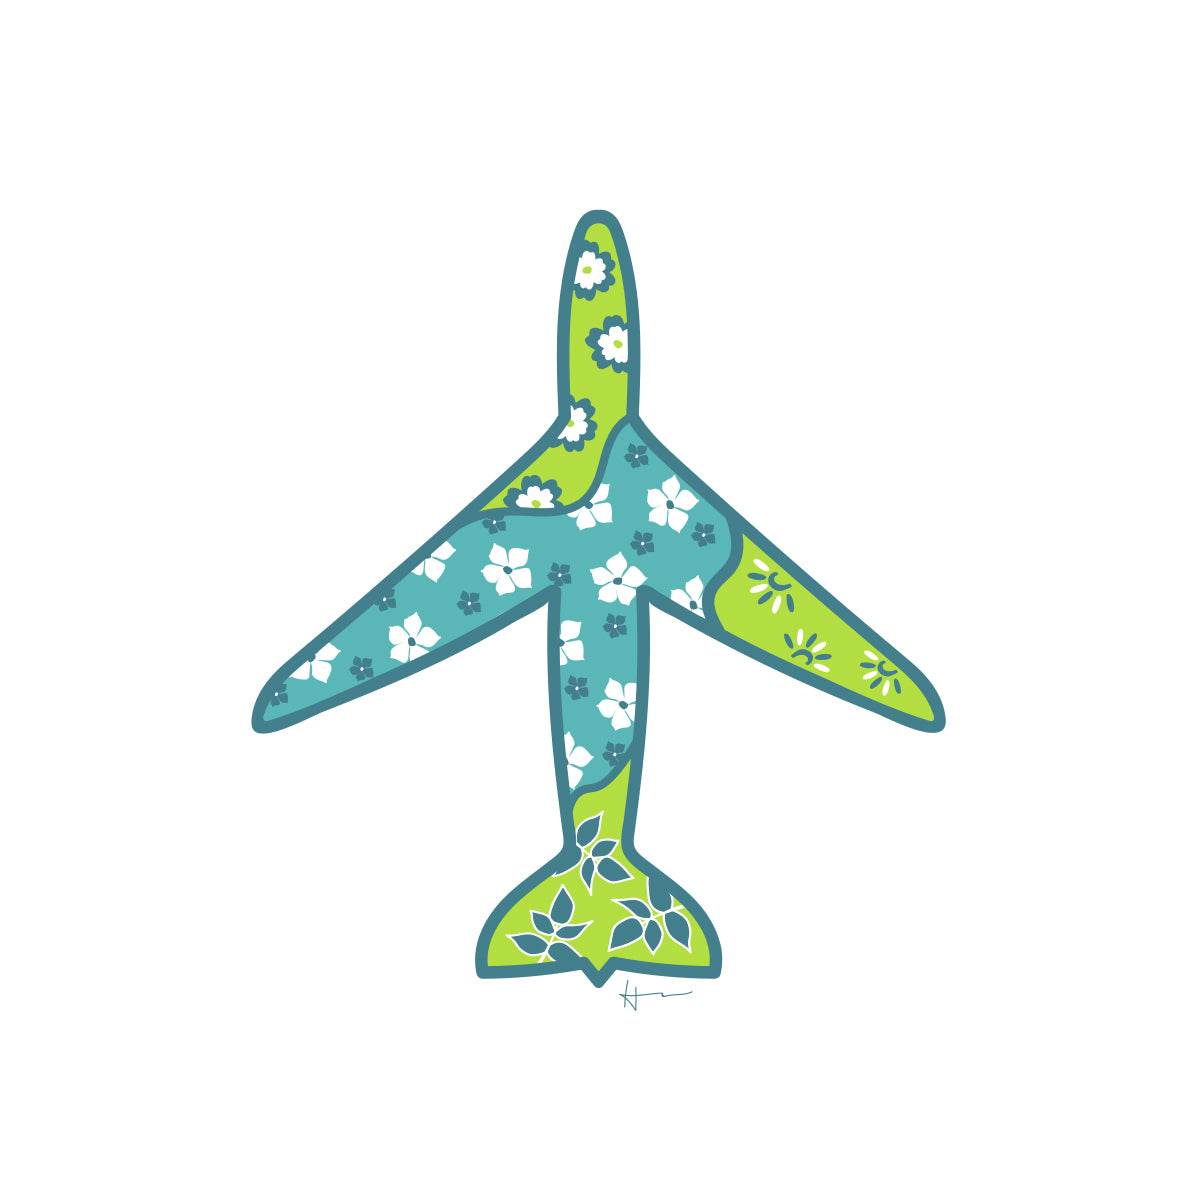 Floral airplane patterned illustration. 